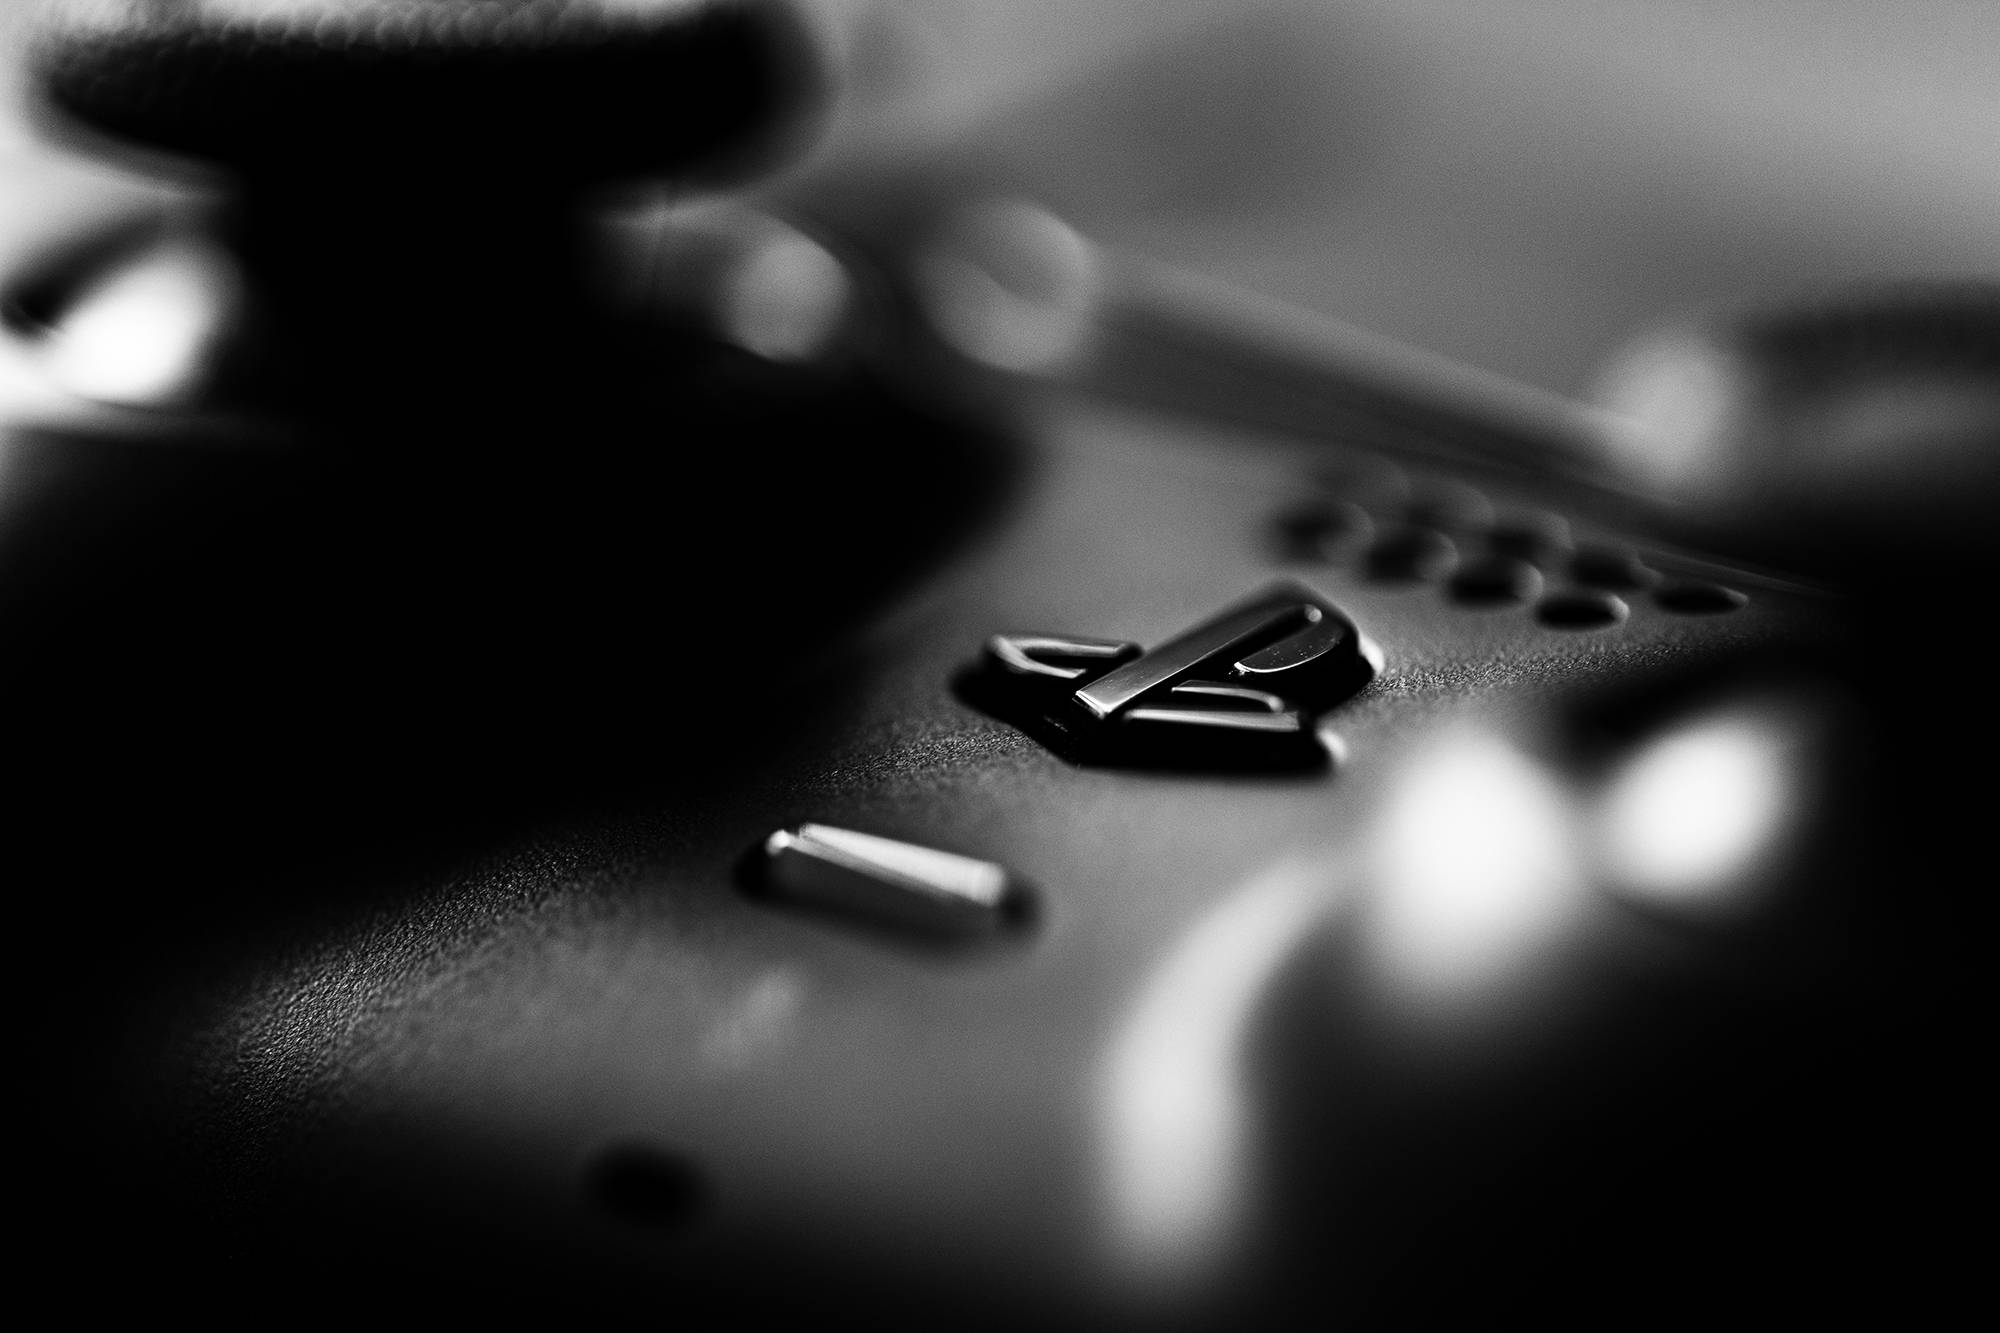 Close up image of a PS5